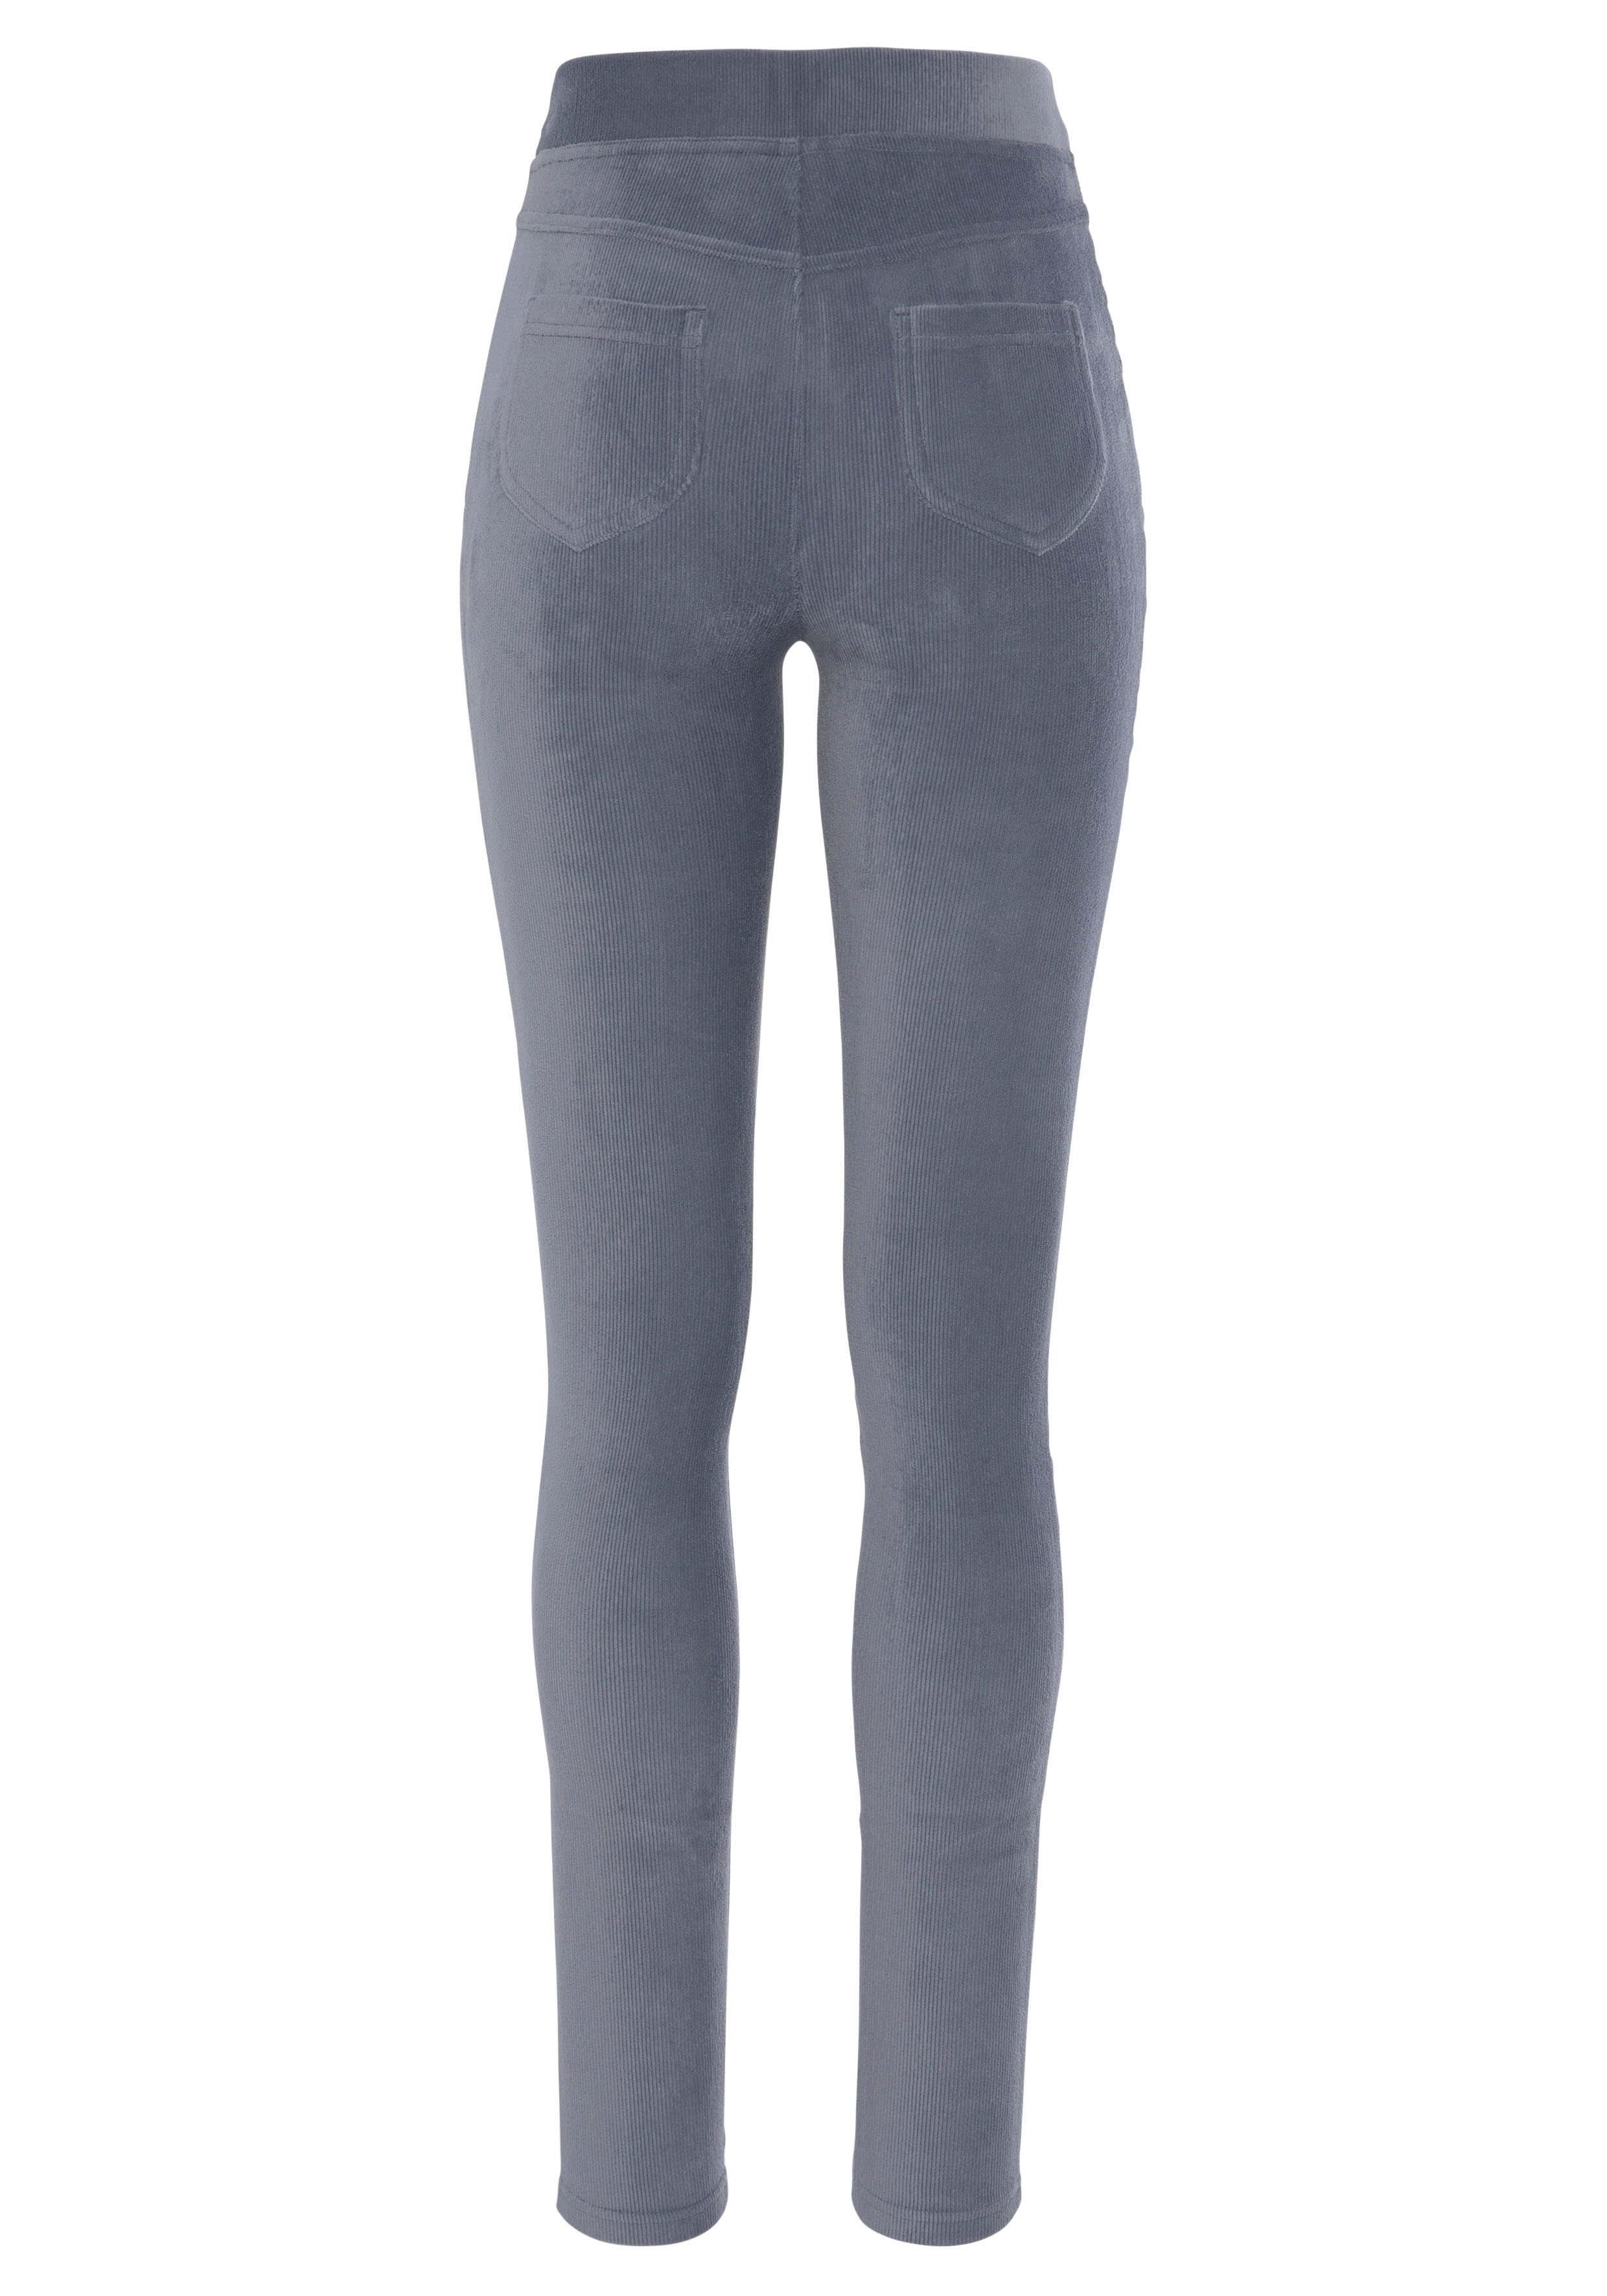 in LASCANA Loungewear Material Leggings aus Cord-Optik, weichem graublau